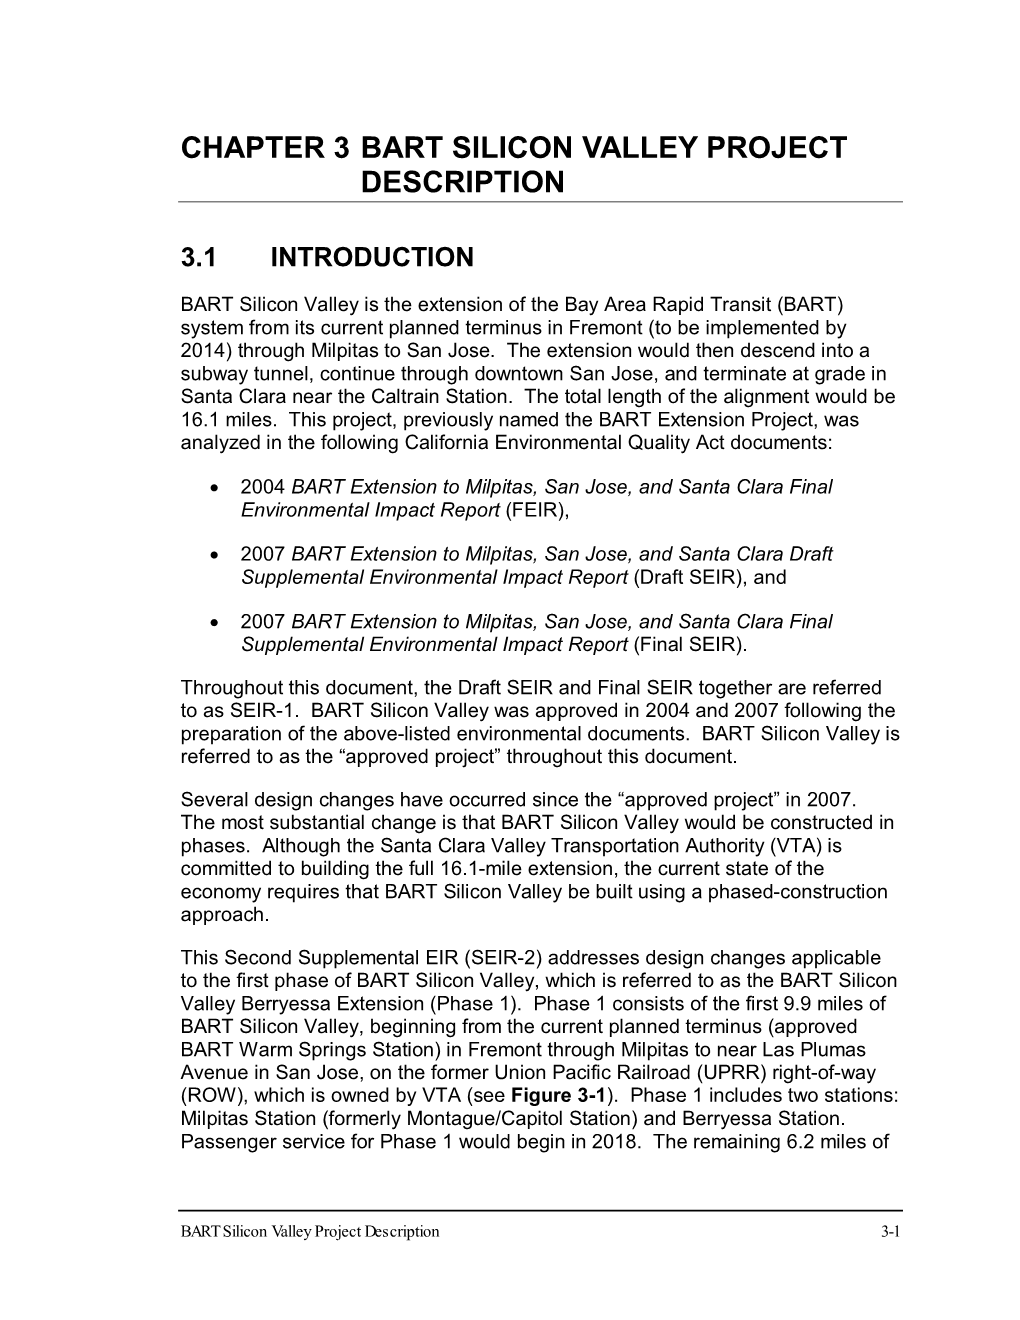 SEIR-2 Chapter 3, BART Silicon Valley Project Description